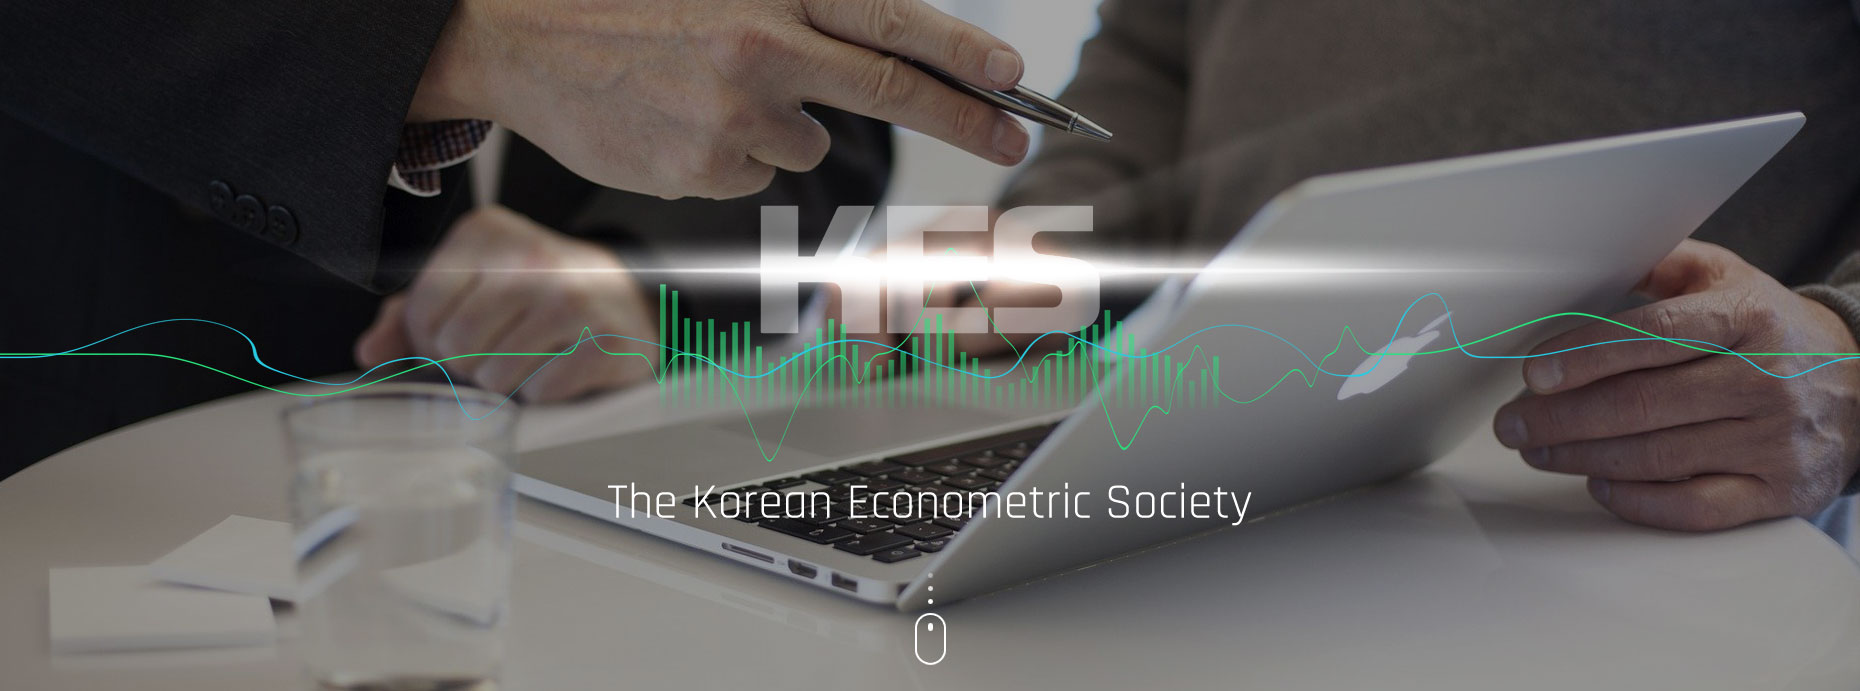 The Korean Econometric Society